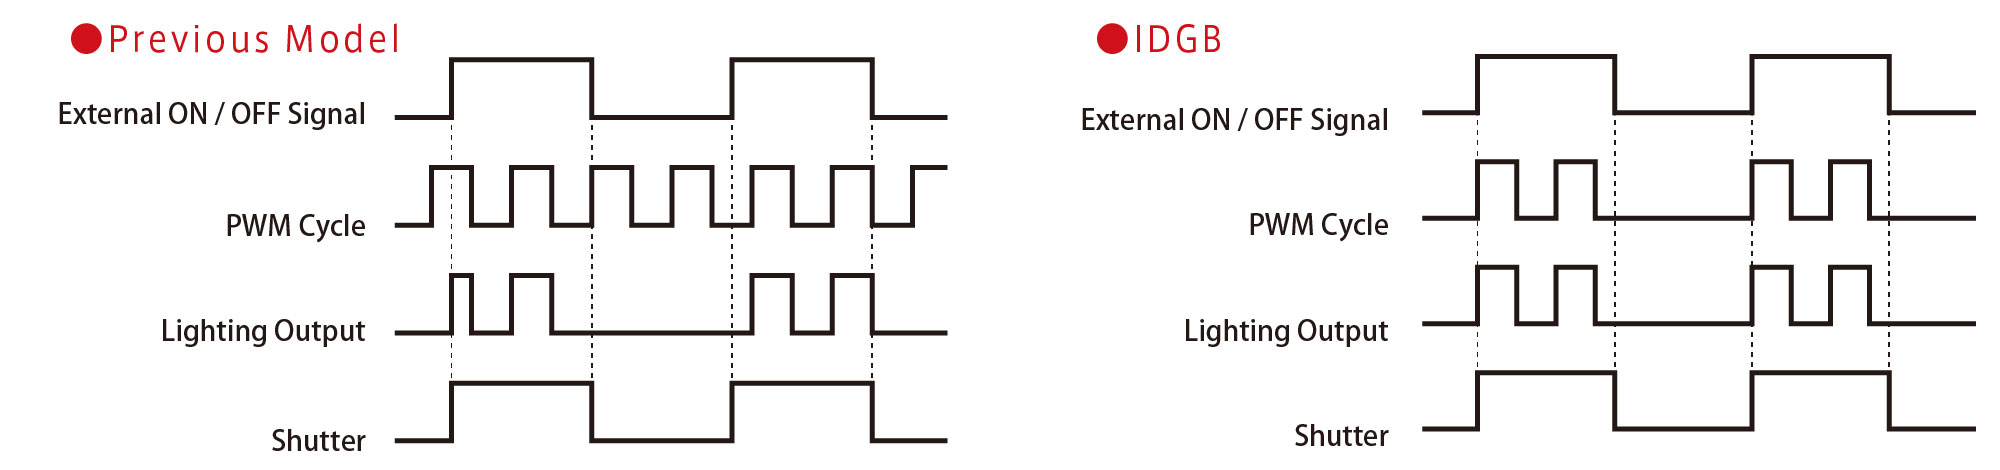 IDGB Product Description 03